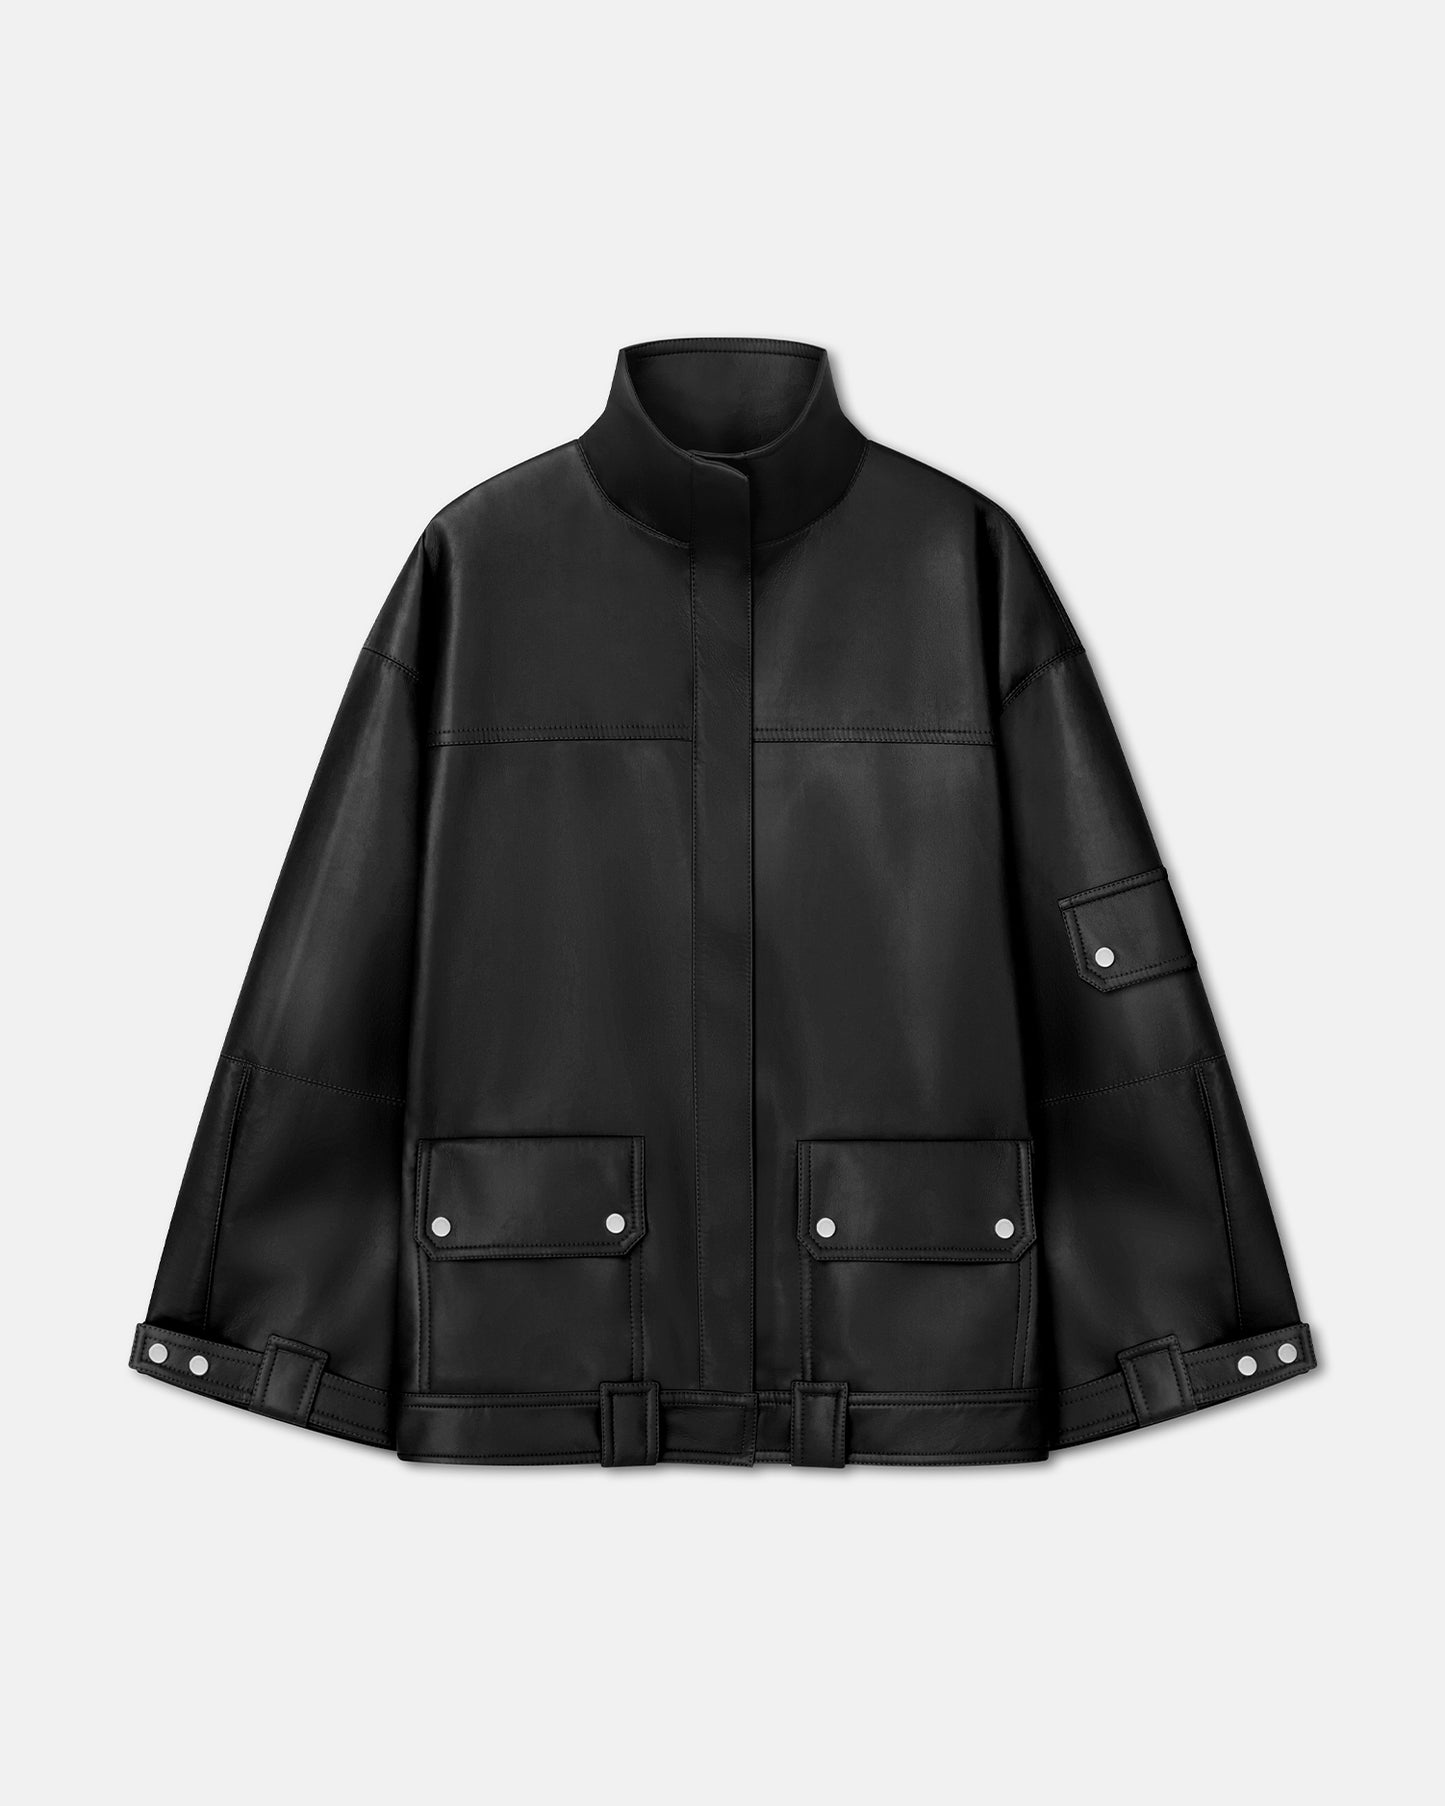 Silva - Regenerated Leather Jacket - Black